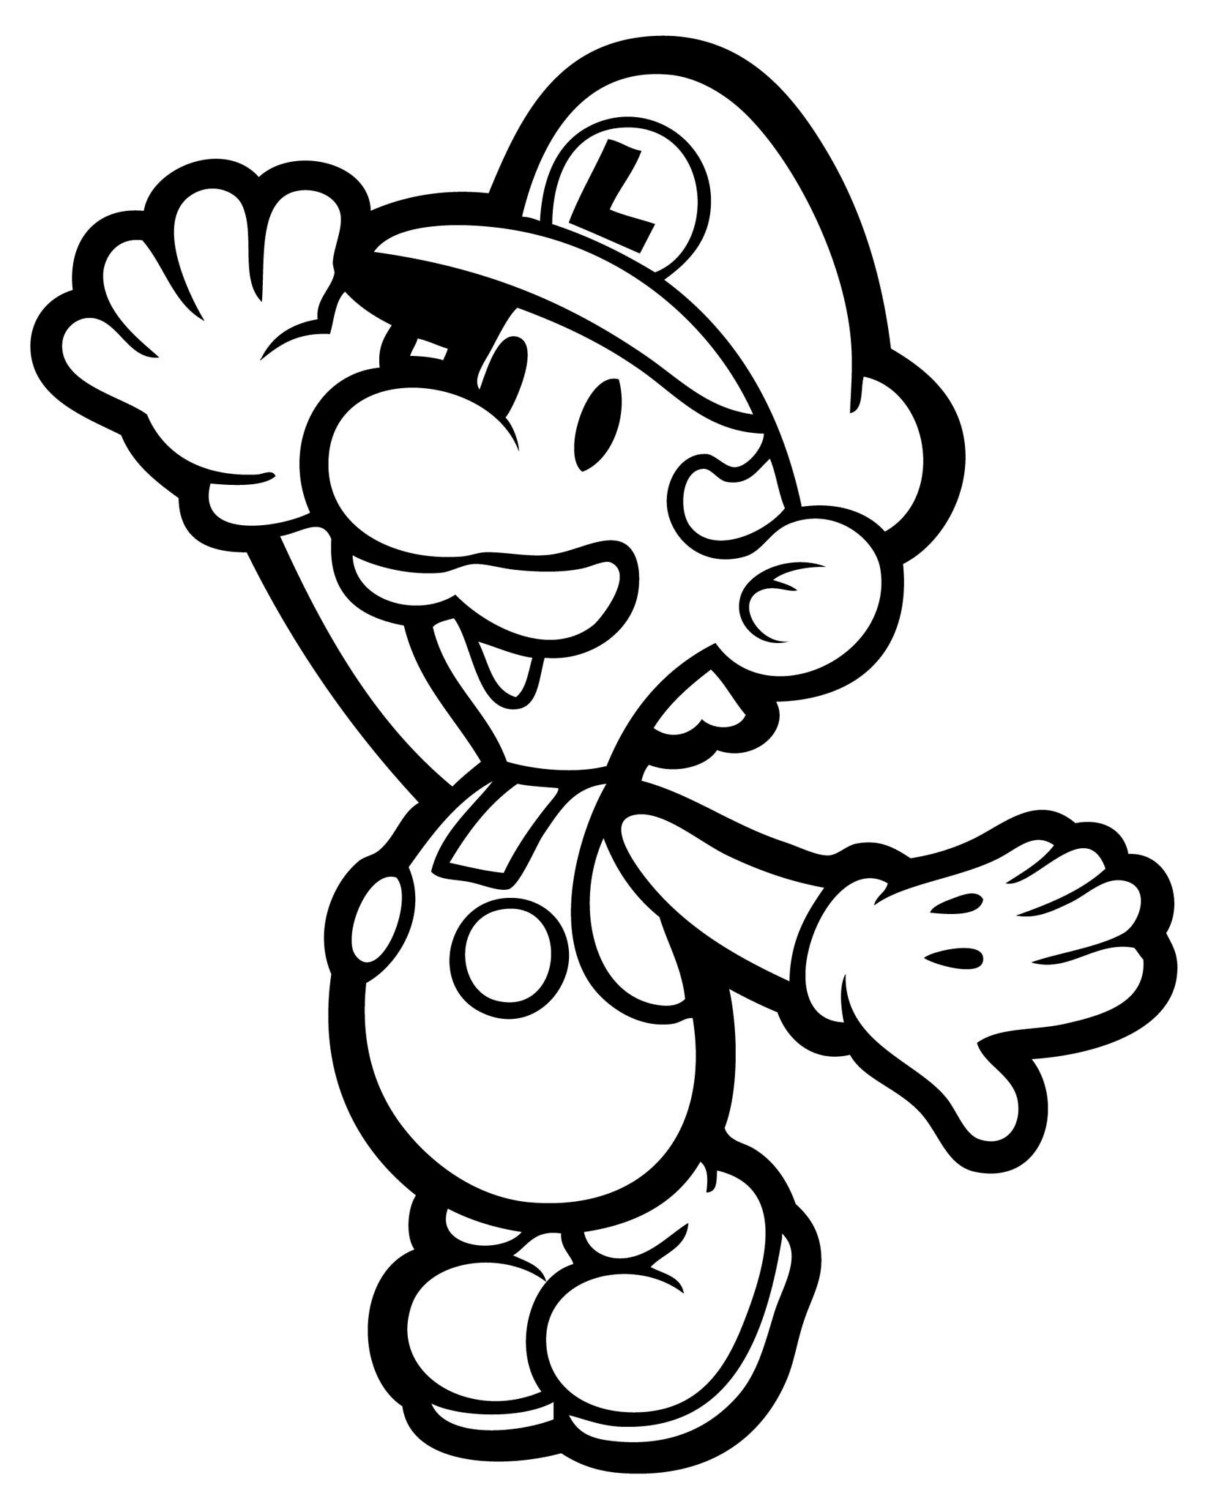 Mario Bros 112605 Video Games – Printable coloring pages